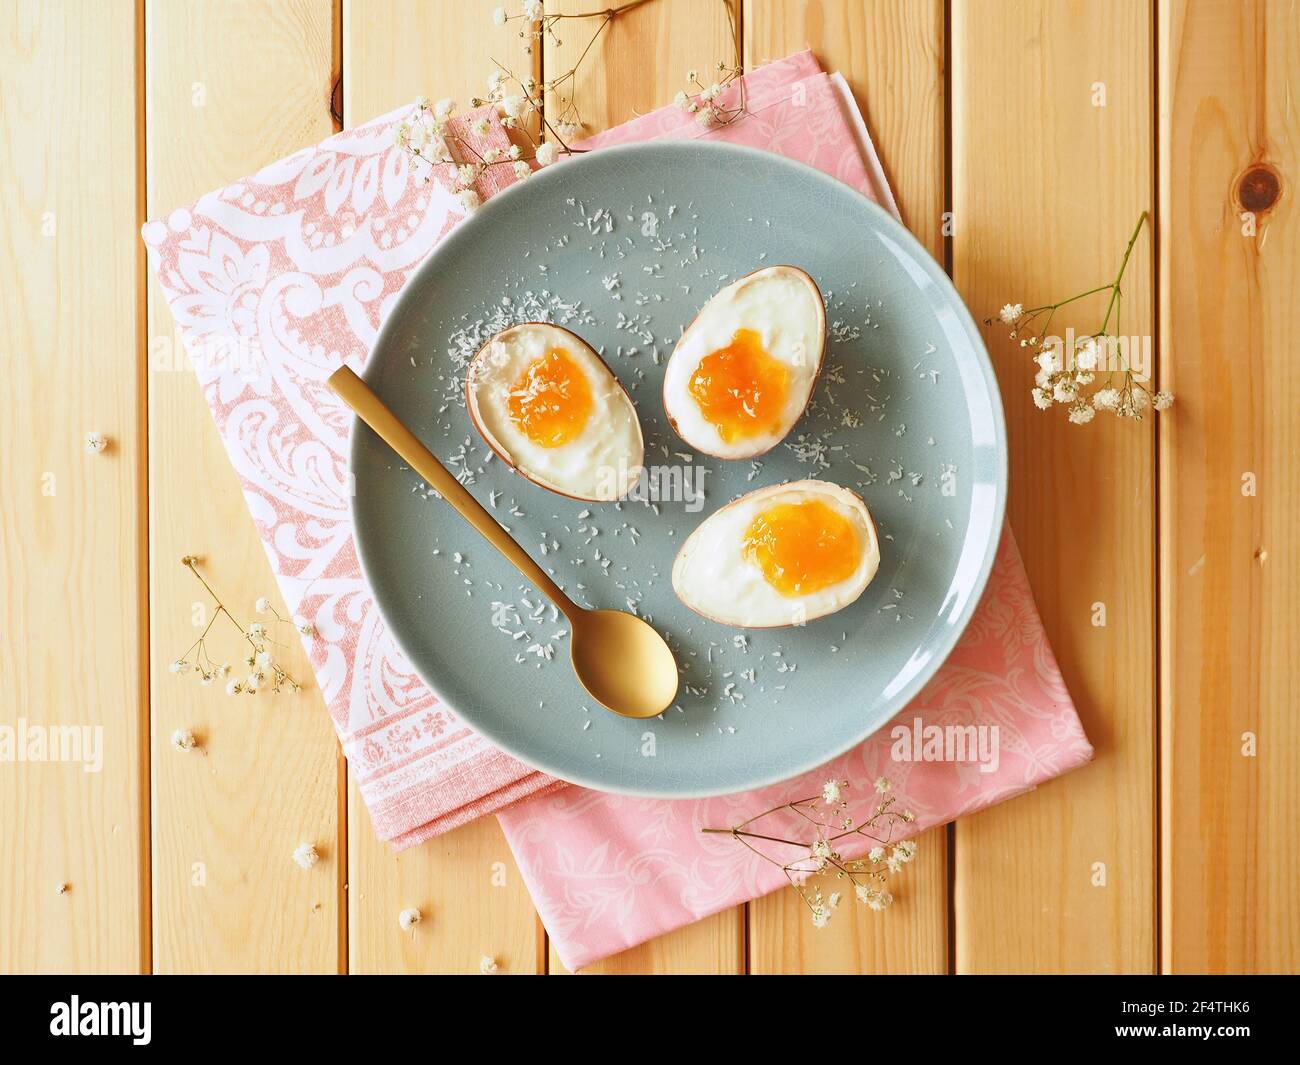 Chocolate eggs with yogurt and orange jam on rustic wooden table Stock Photo